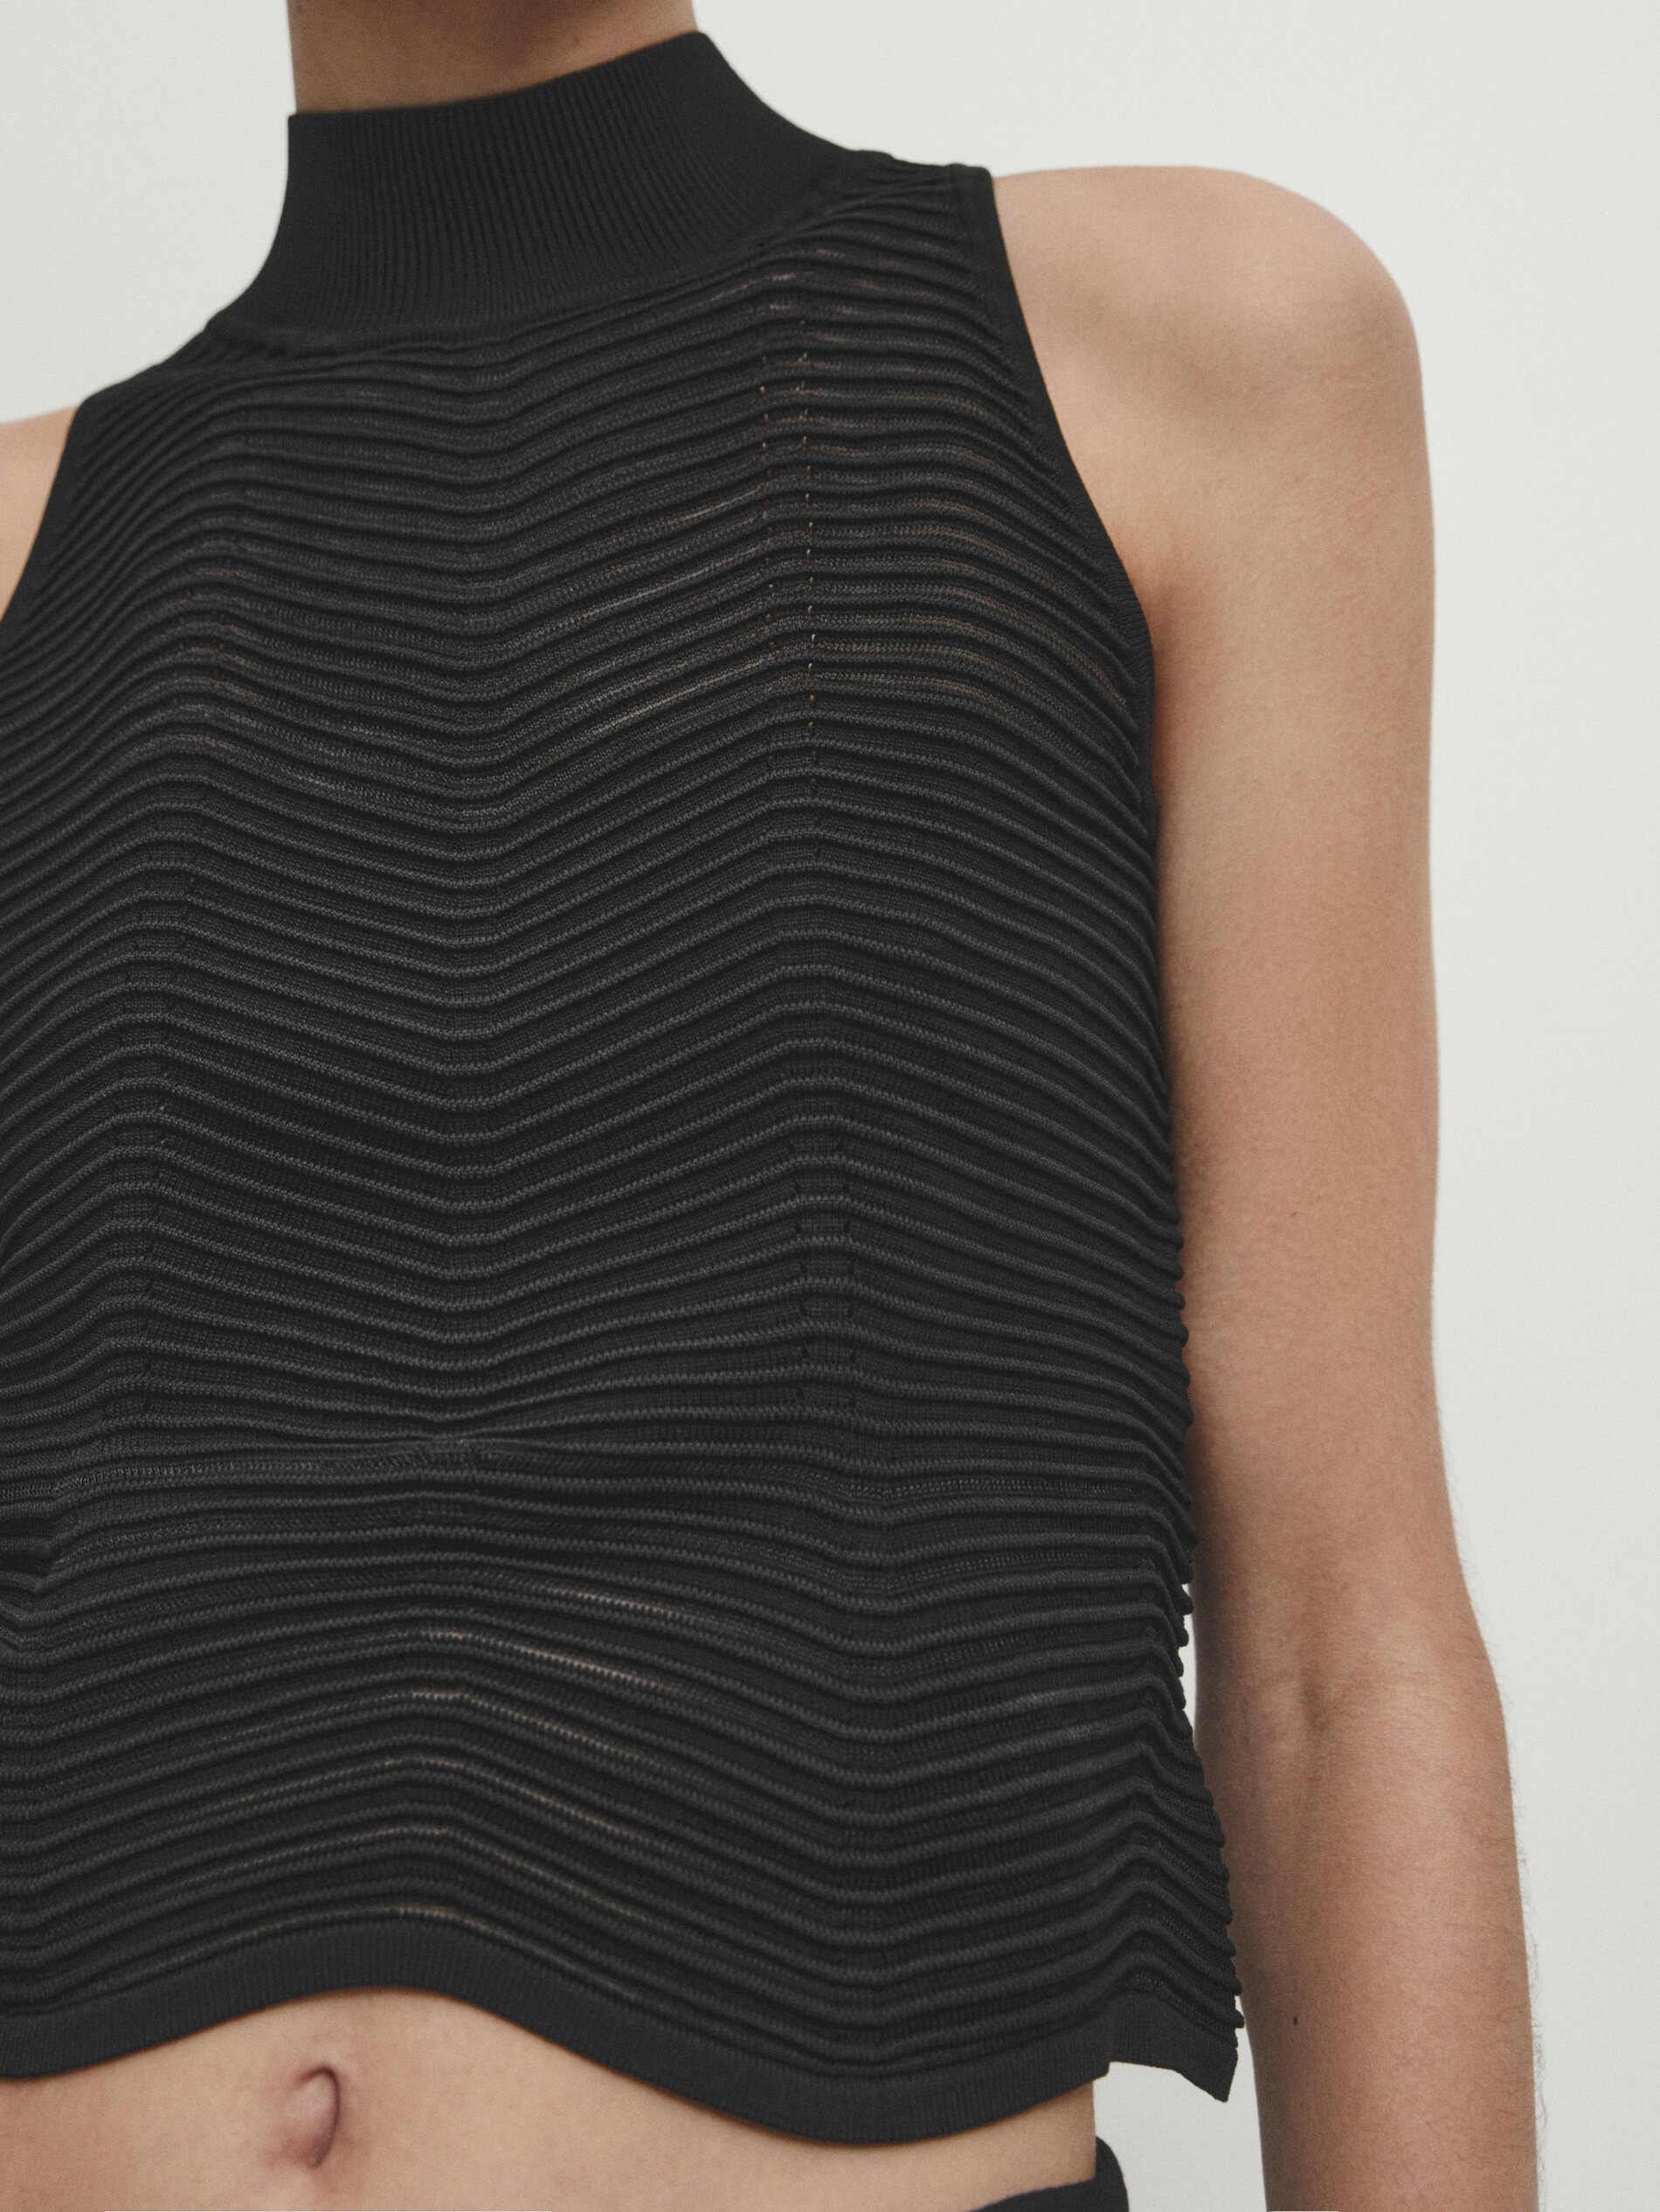 Zigzag knit mock turtleneck top - Studio · Black · Sweaters And 